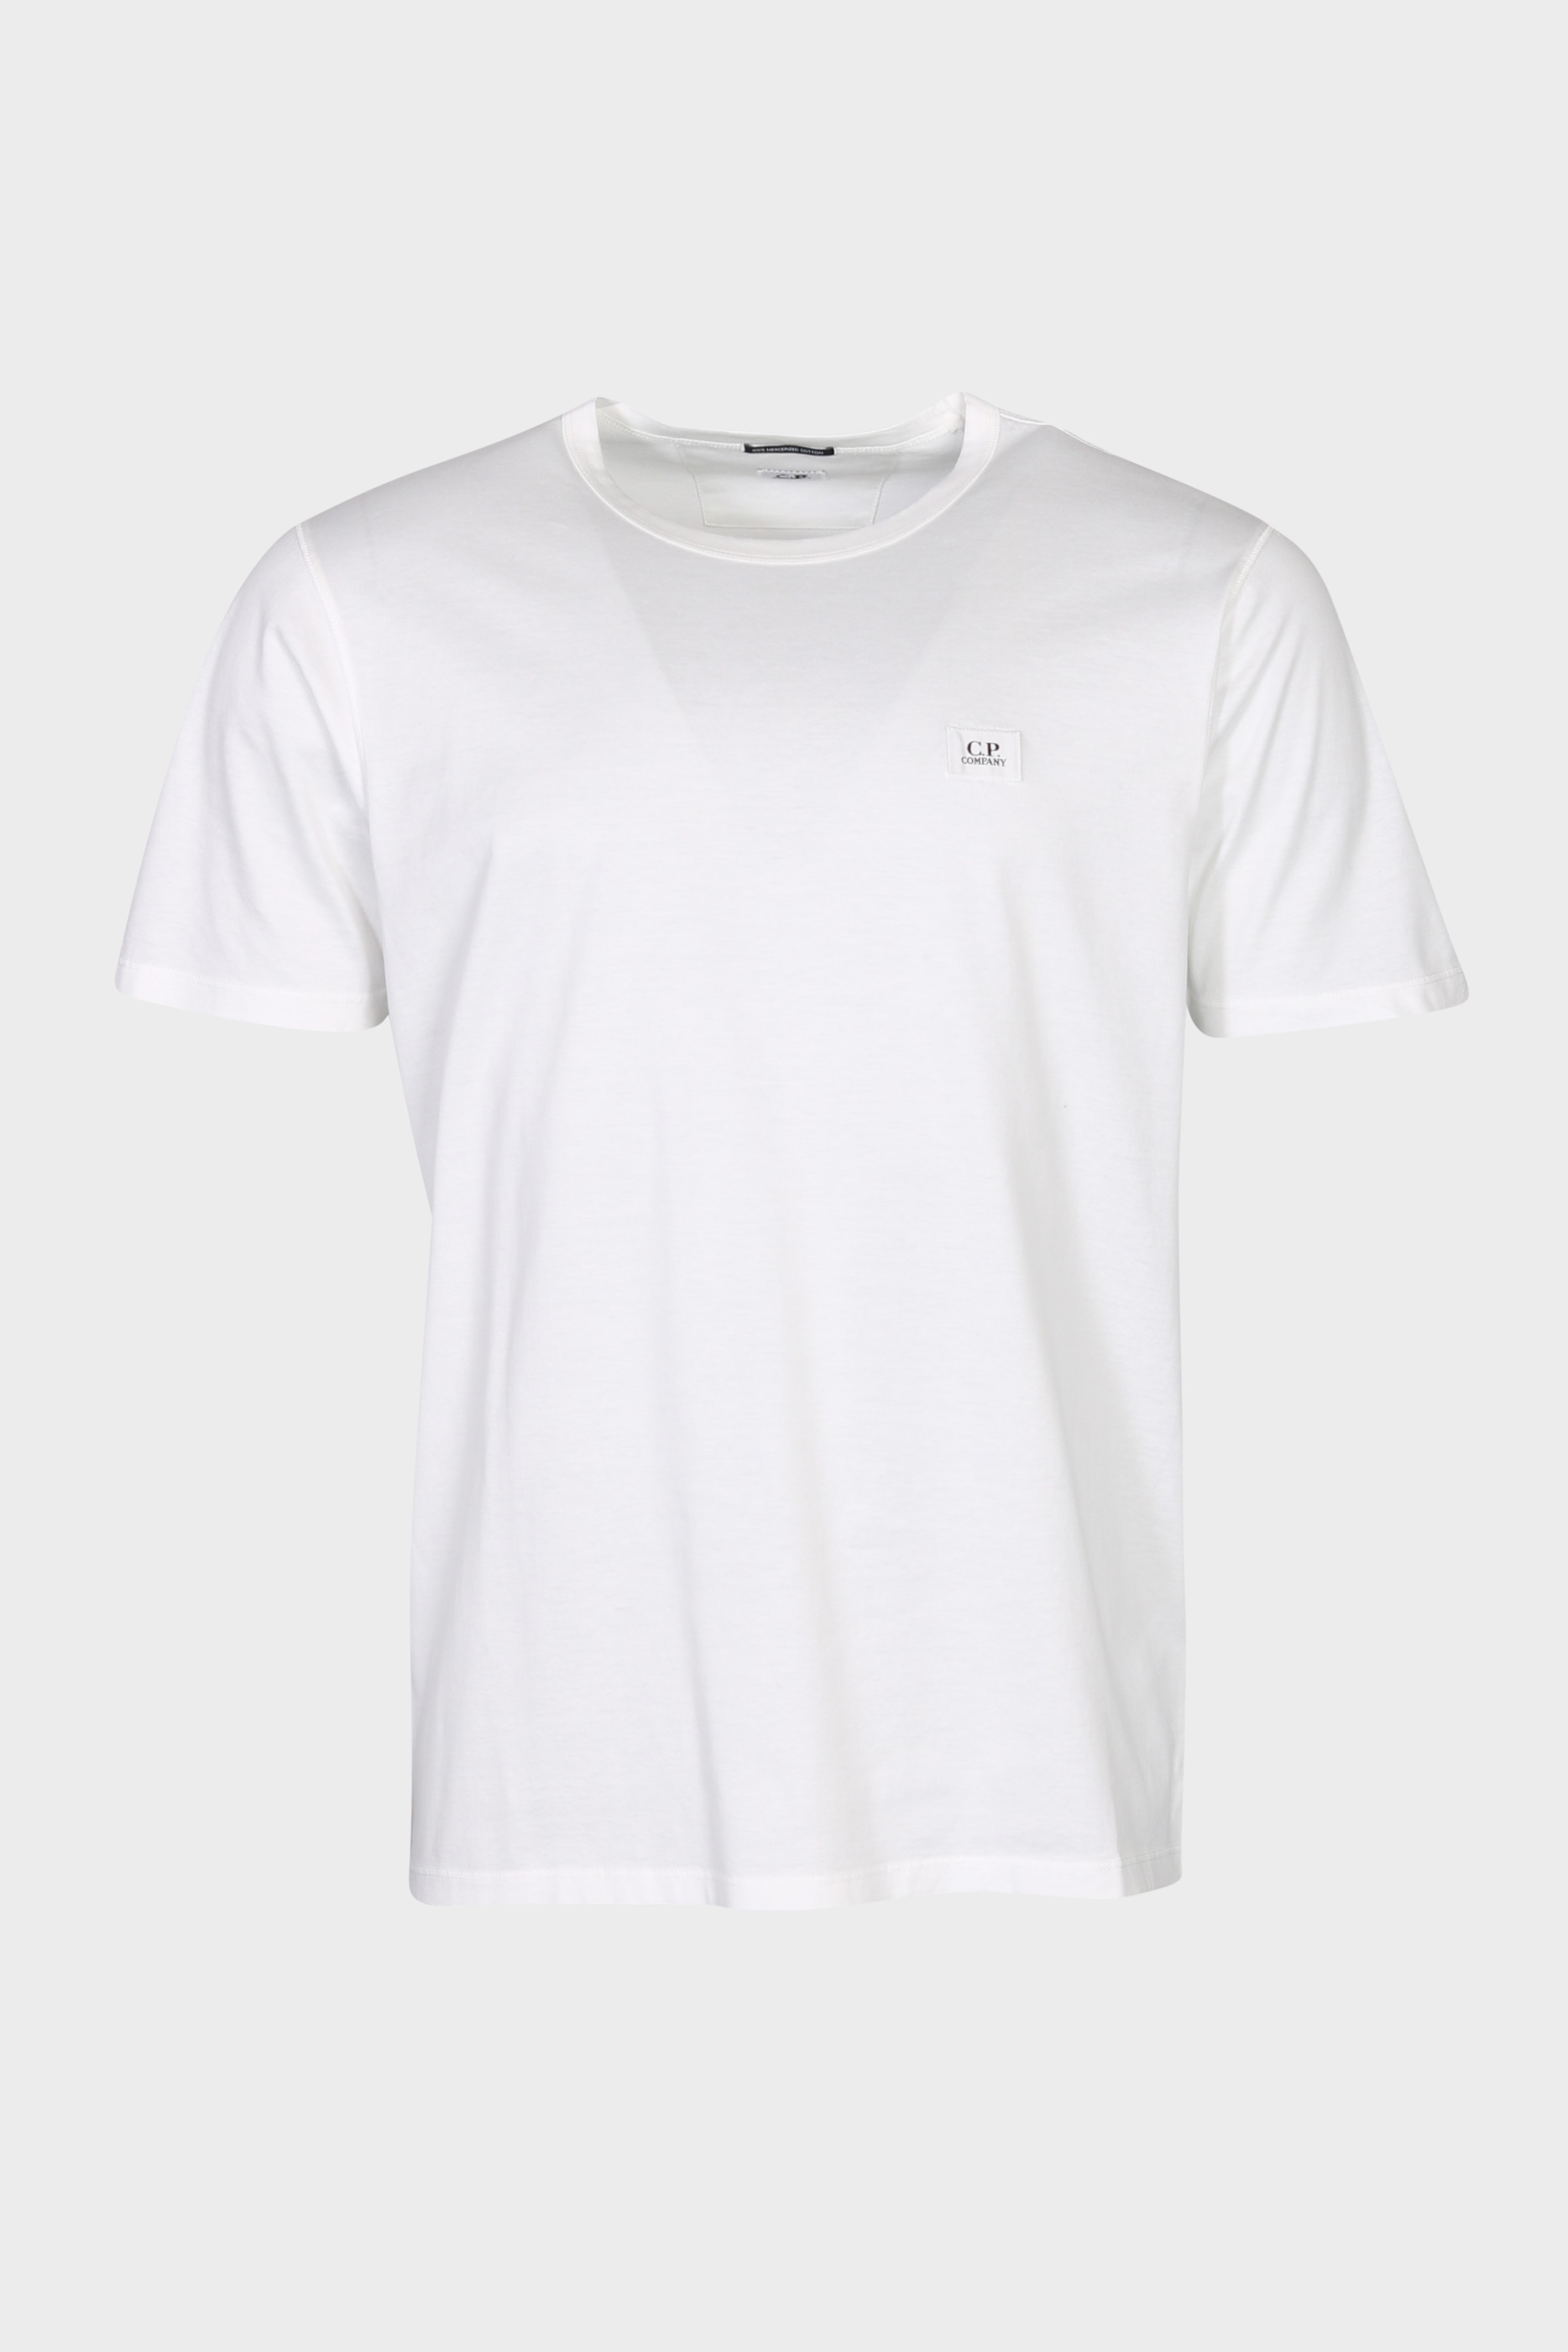 C.P. COMPANY T-Shirt in White M